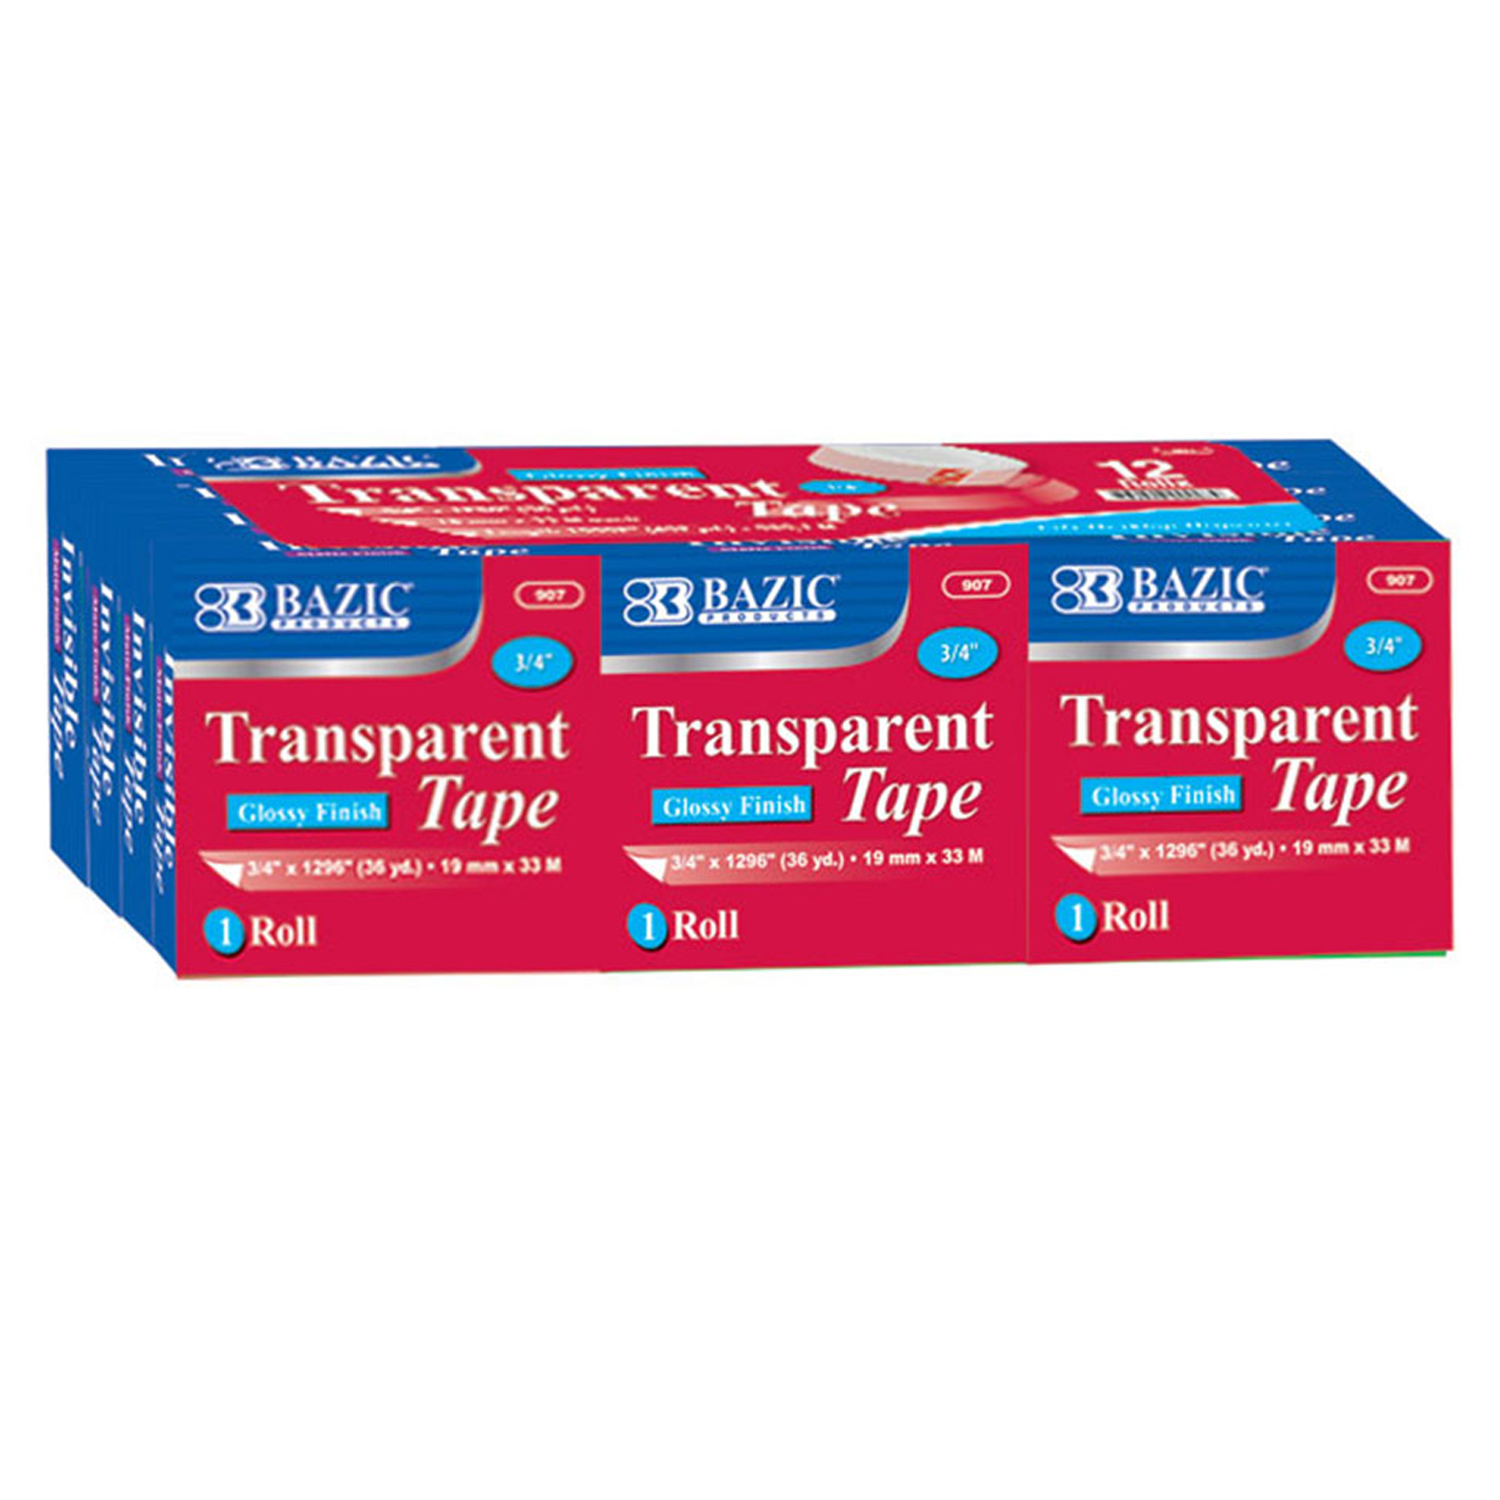 Tape Refill, Transparent Tape, 3/4" x 1296", 12 Per Pack, 2 Packs